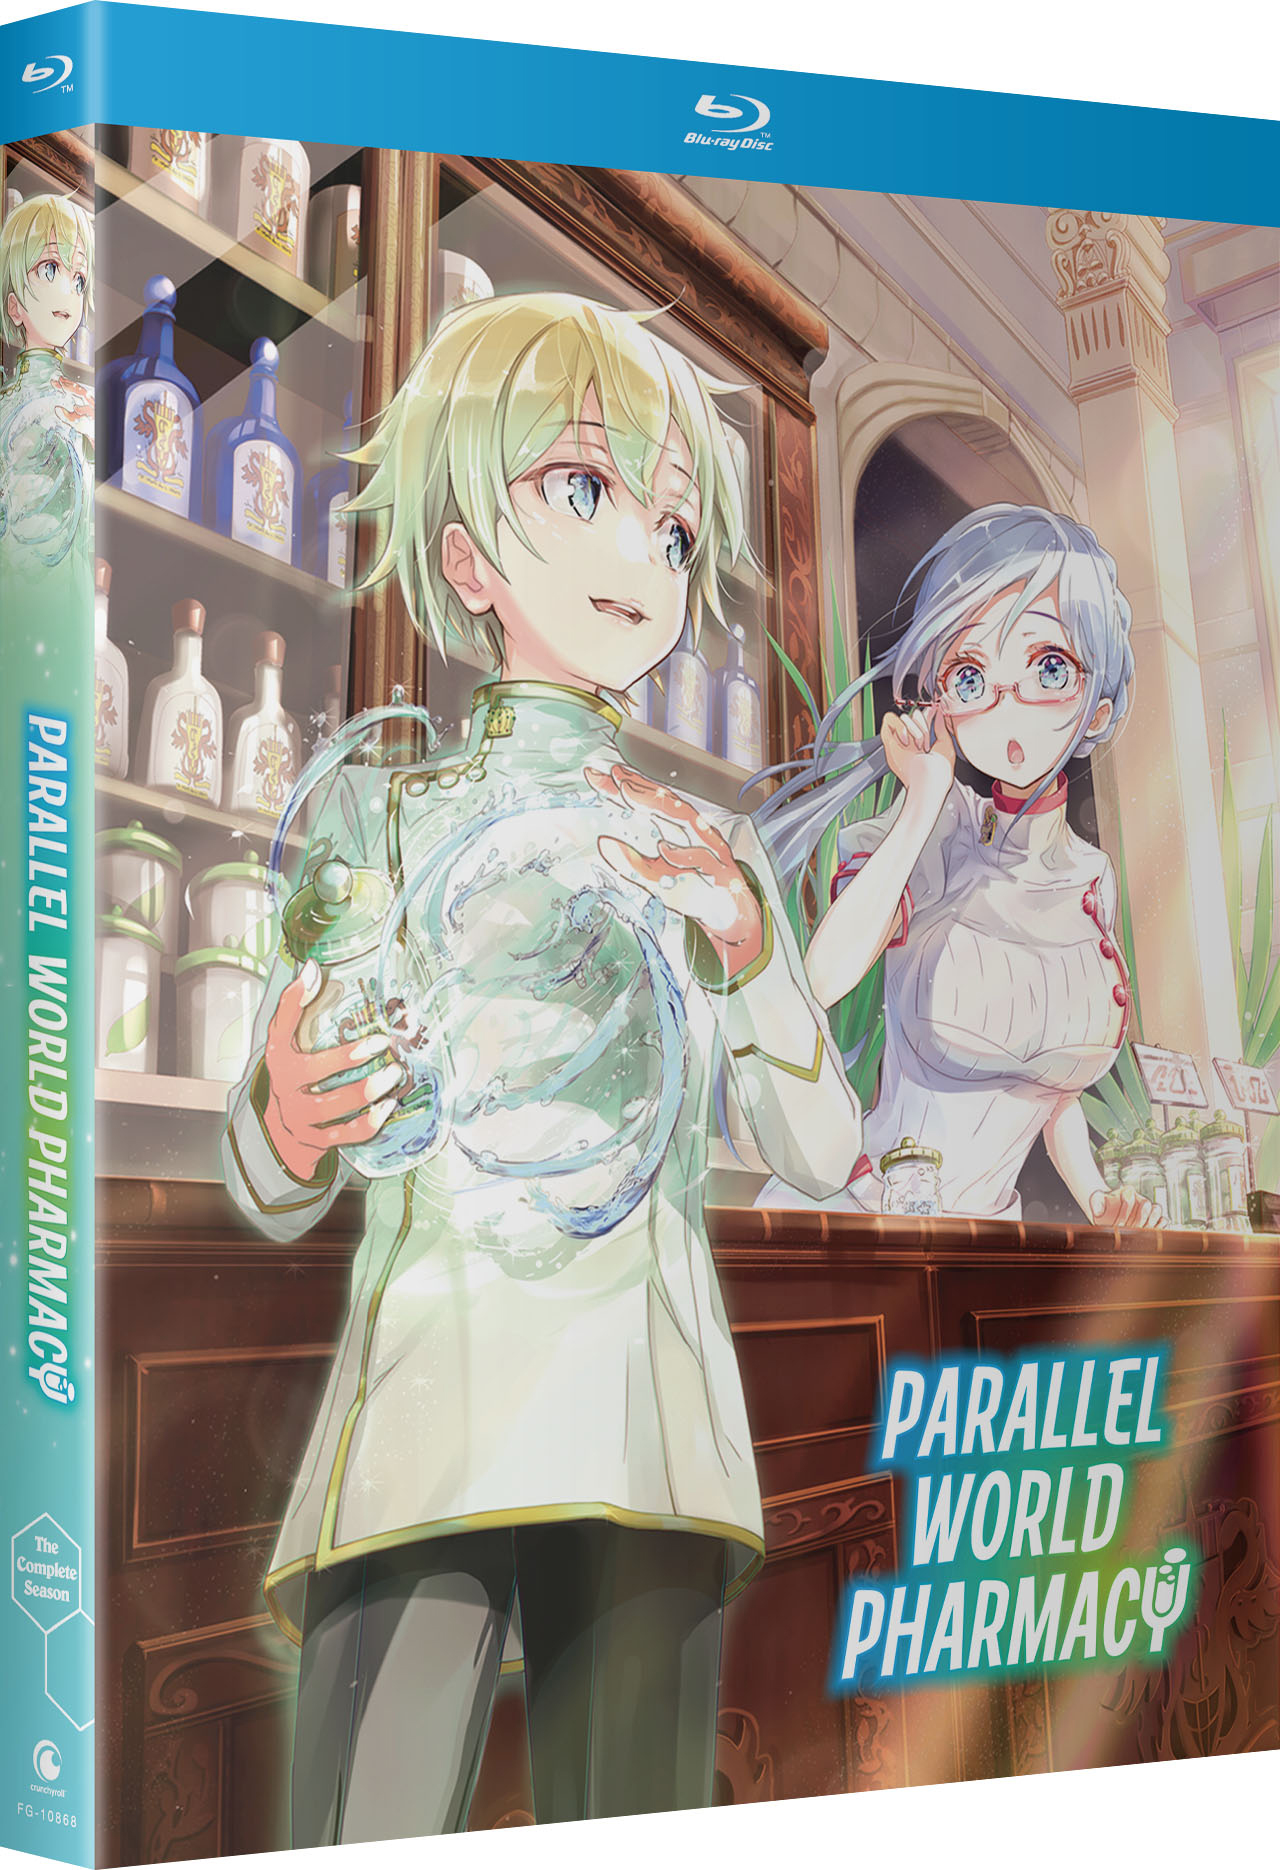 Anime Like Parallel World Pharmacy